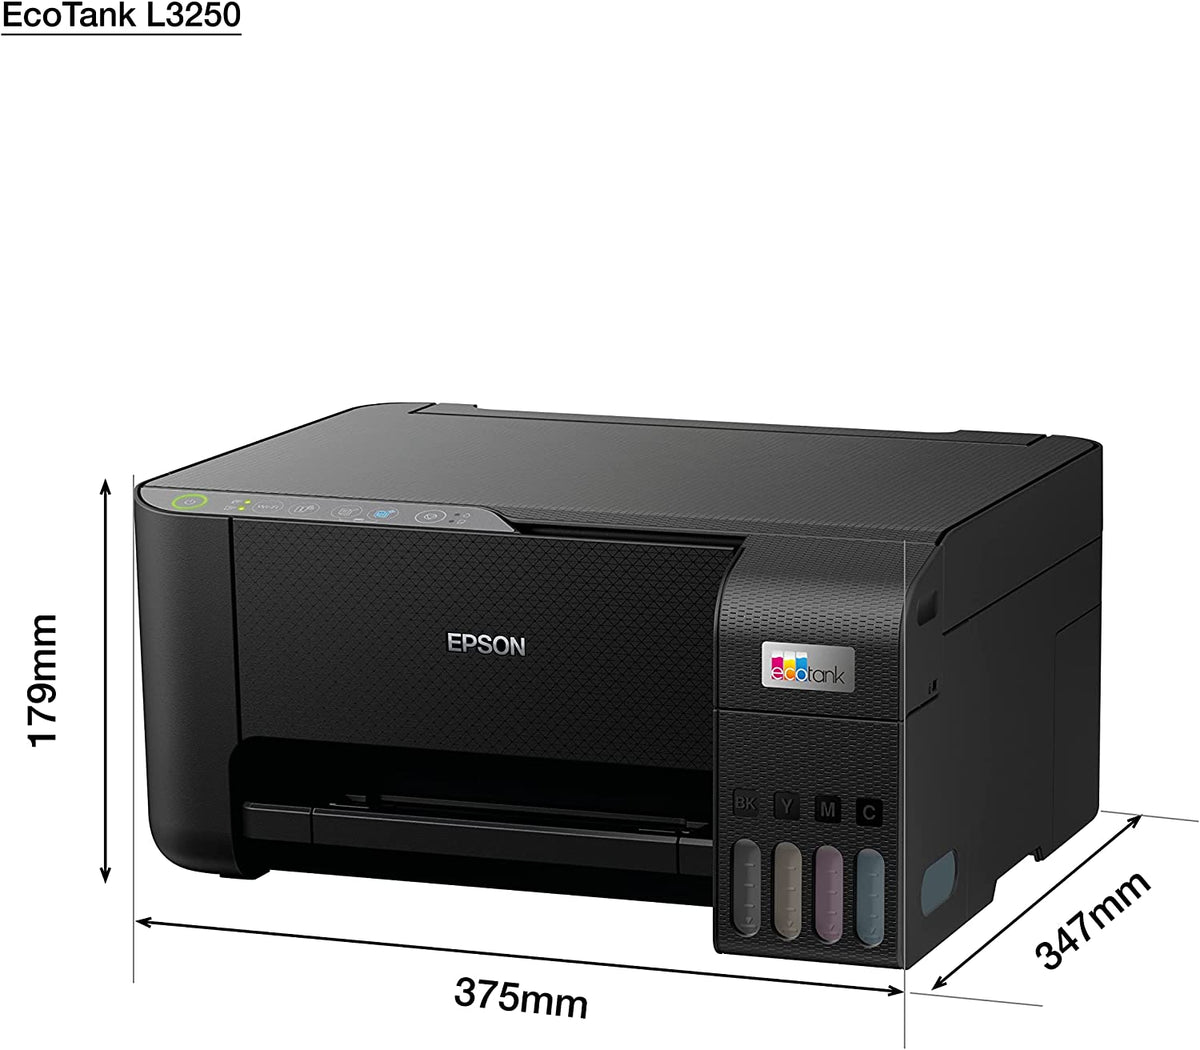 Epson Ecotank L3250 Home Ink Tank Printer A4 Colour And More Newtech Store Saudi Arabia 2883